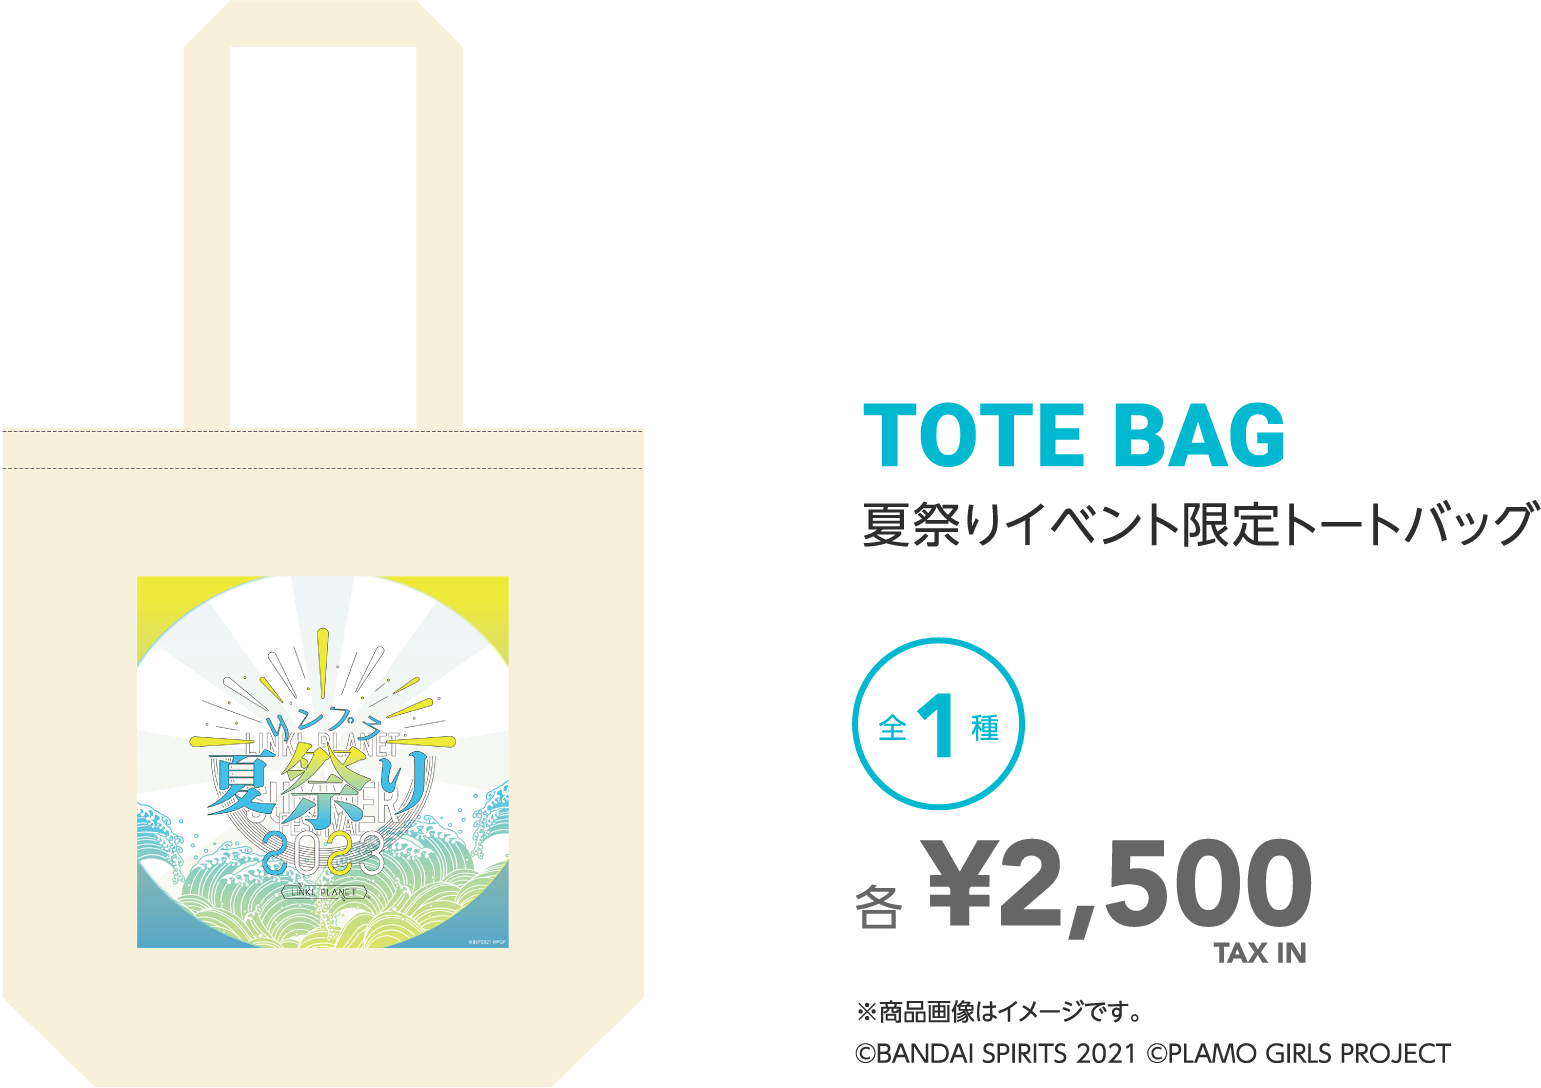 TOTE BAG 夏祭りイベント限定トートバッグ 全1種 各¥2,500 TAX IN ※商品画像はイメージです。©BANDAI SPIRITS 2021 ©PLAMO GIRLS PROJECT